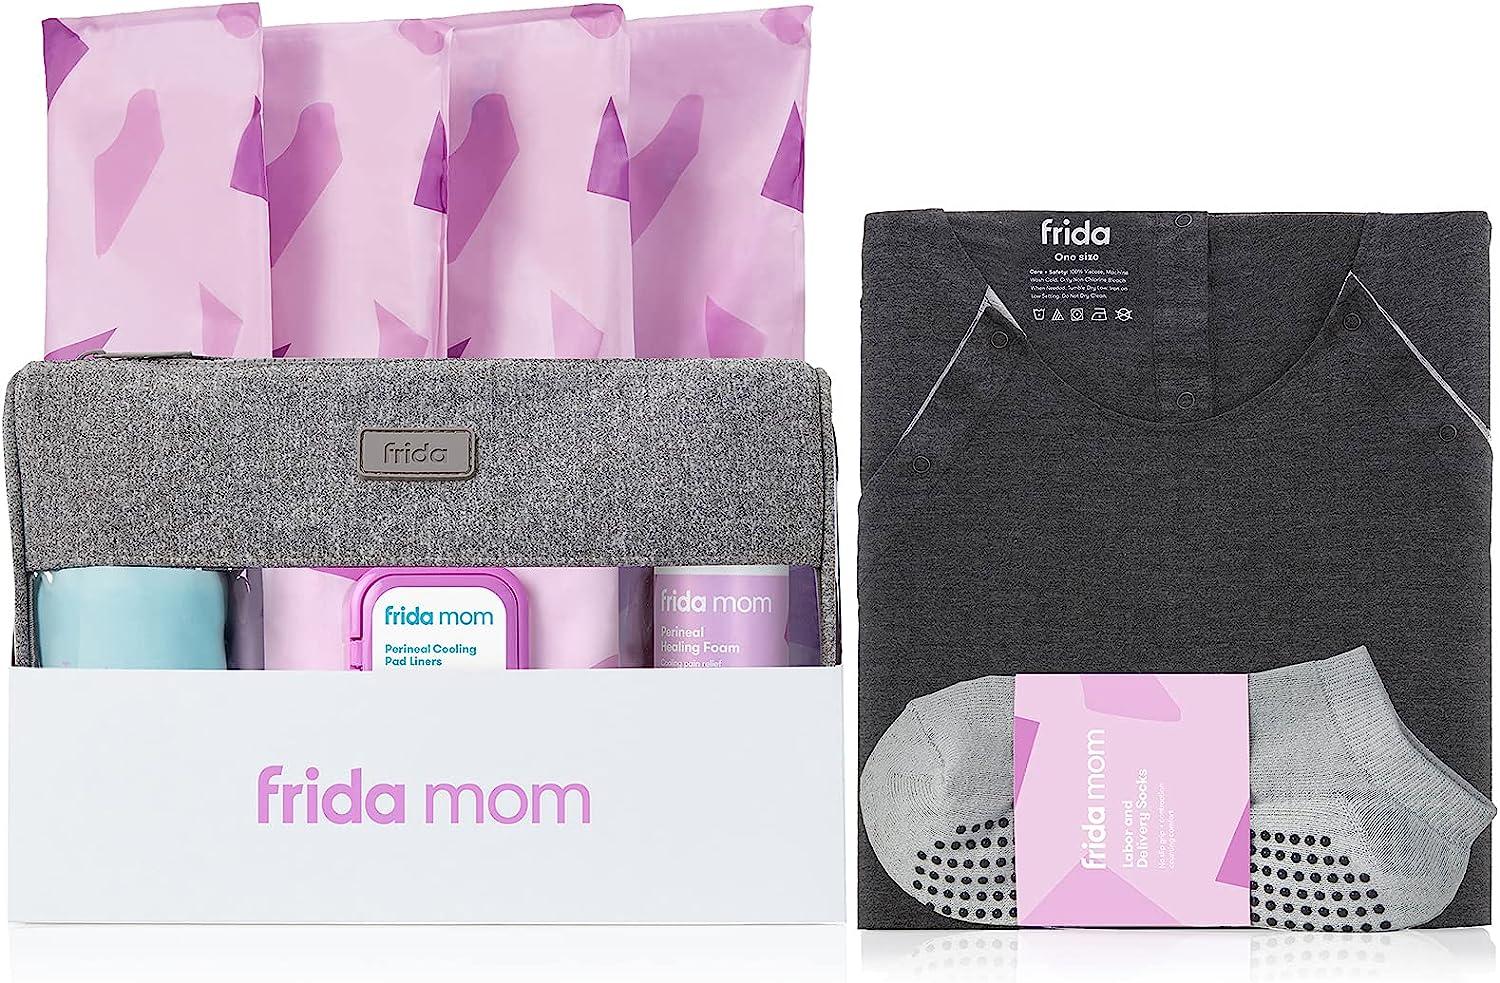 Frida Mom Labor, Delivery & Nursing Gown, frida mom 